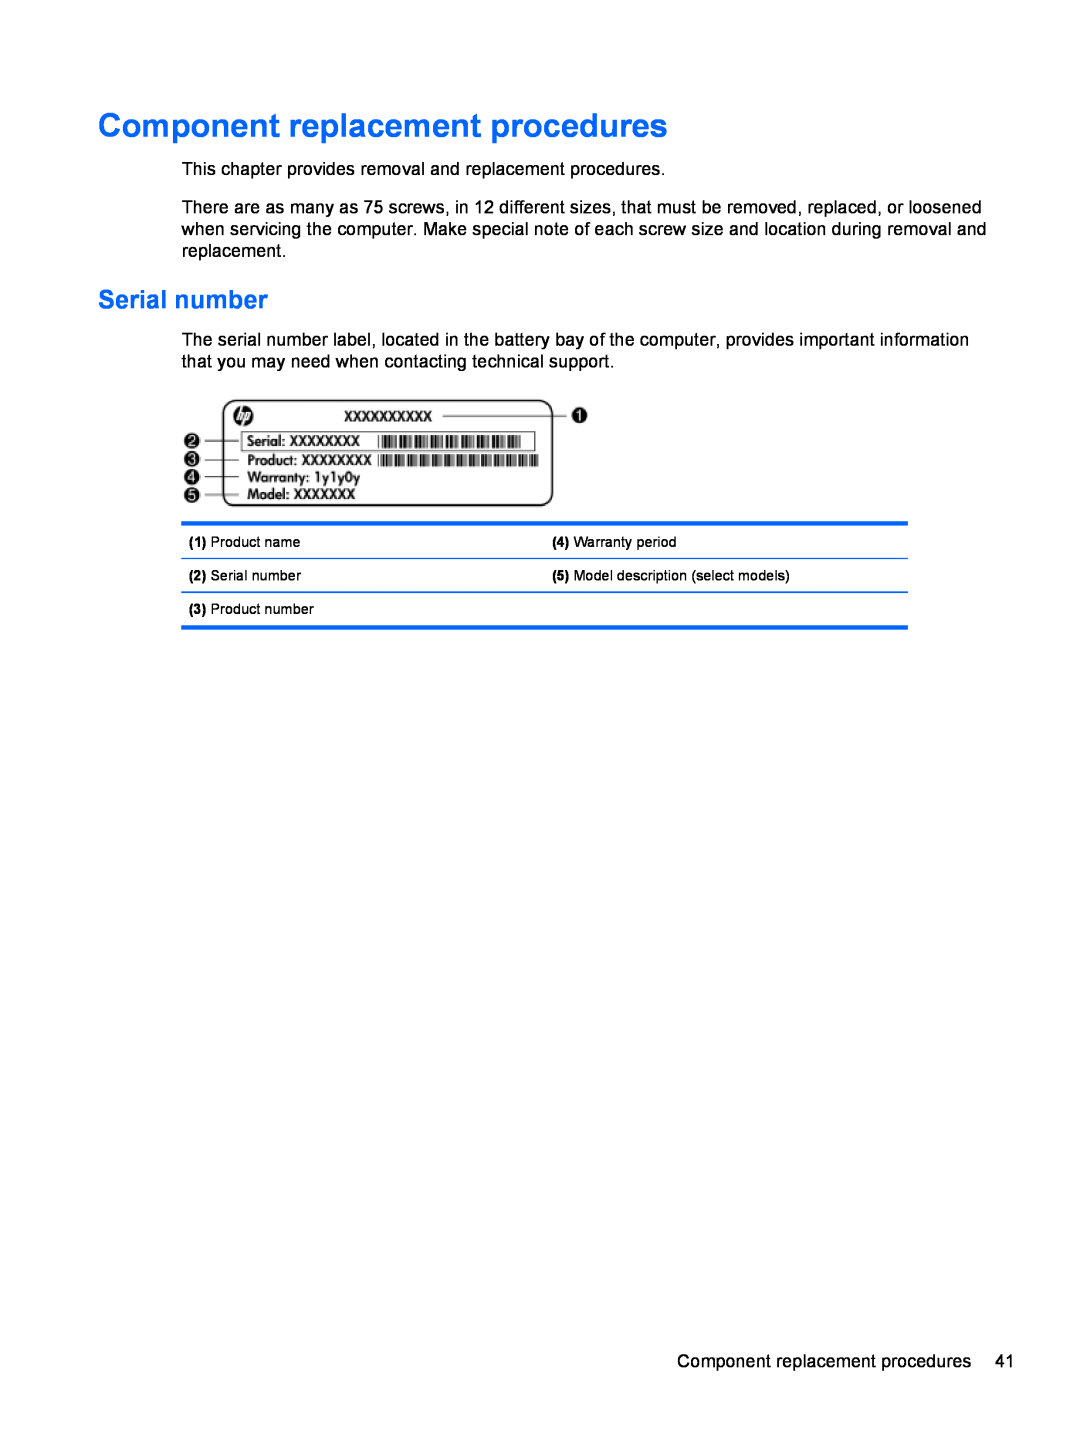 Compaq CQ42 manual Component replacement procedures, Serial number 